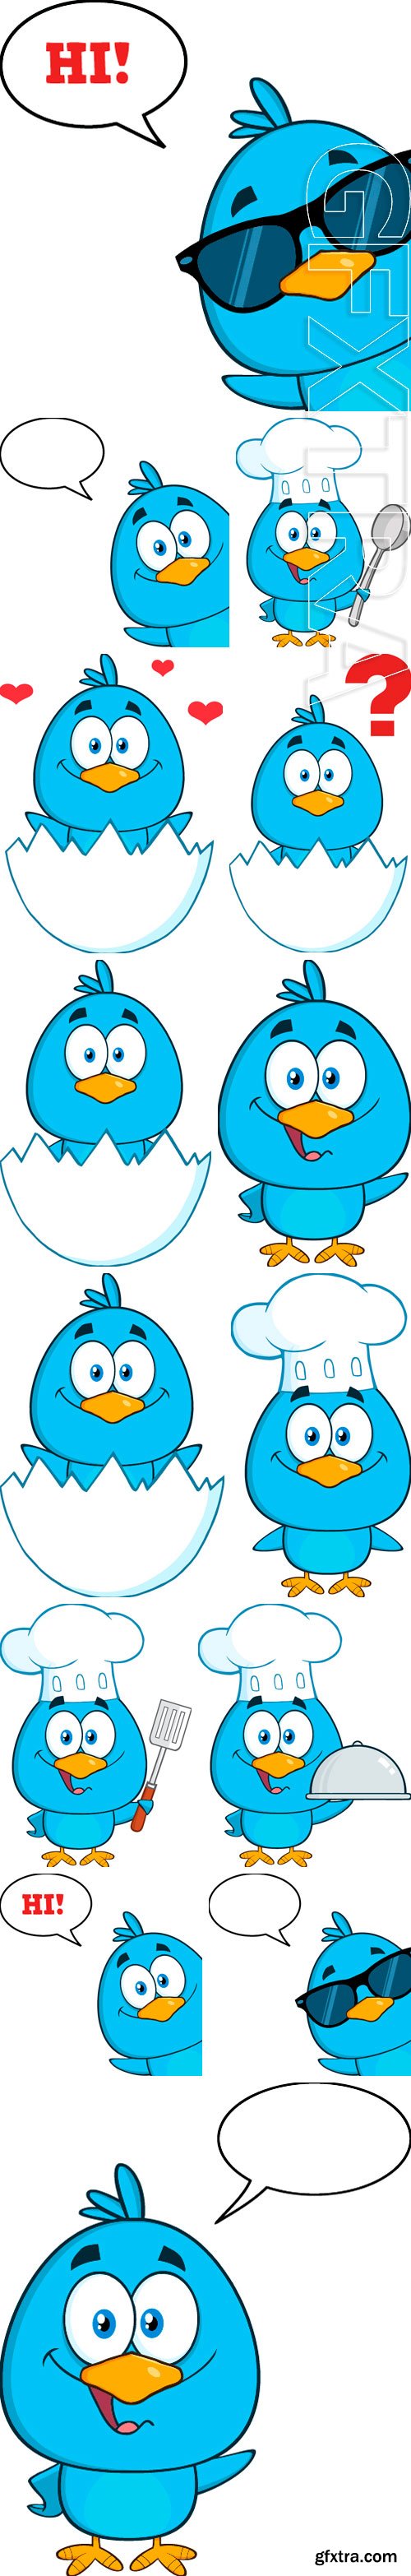 Stock Vectors - Cute Blue Bird Cartoon Character. Vector Illustration Isolated On White